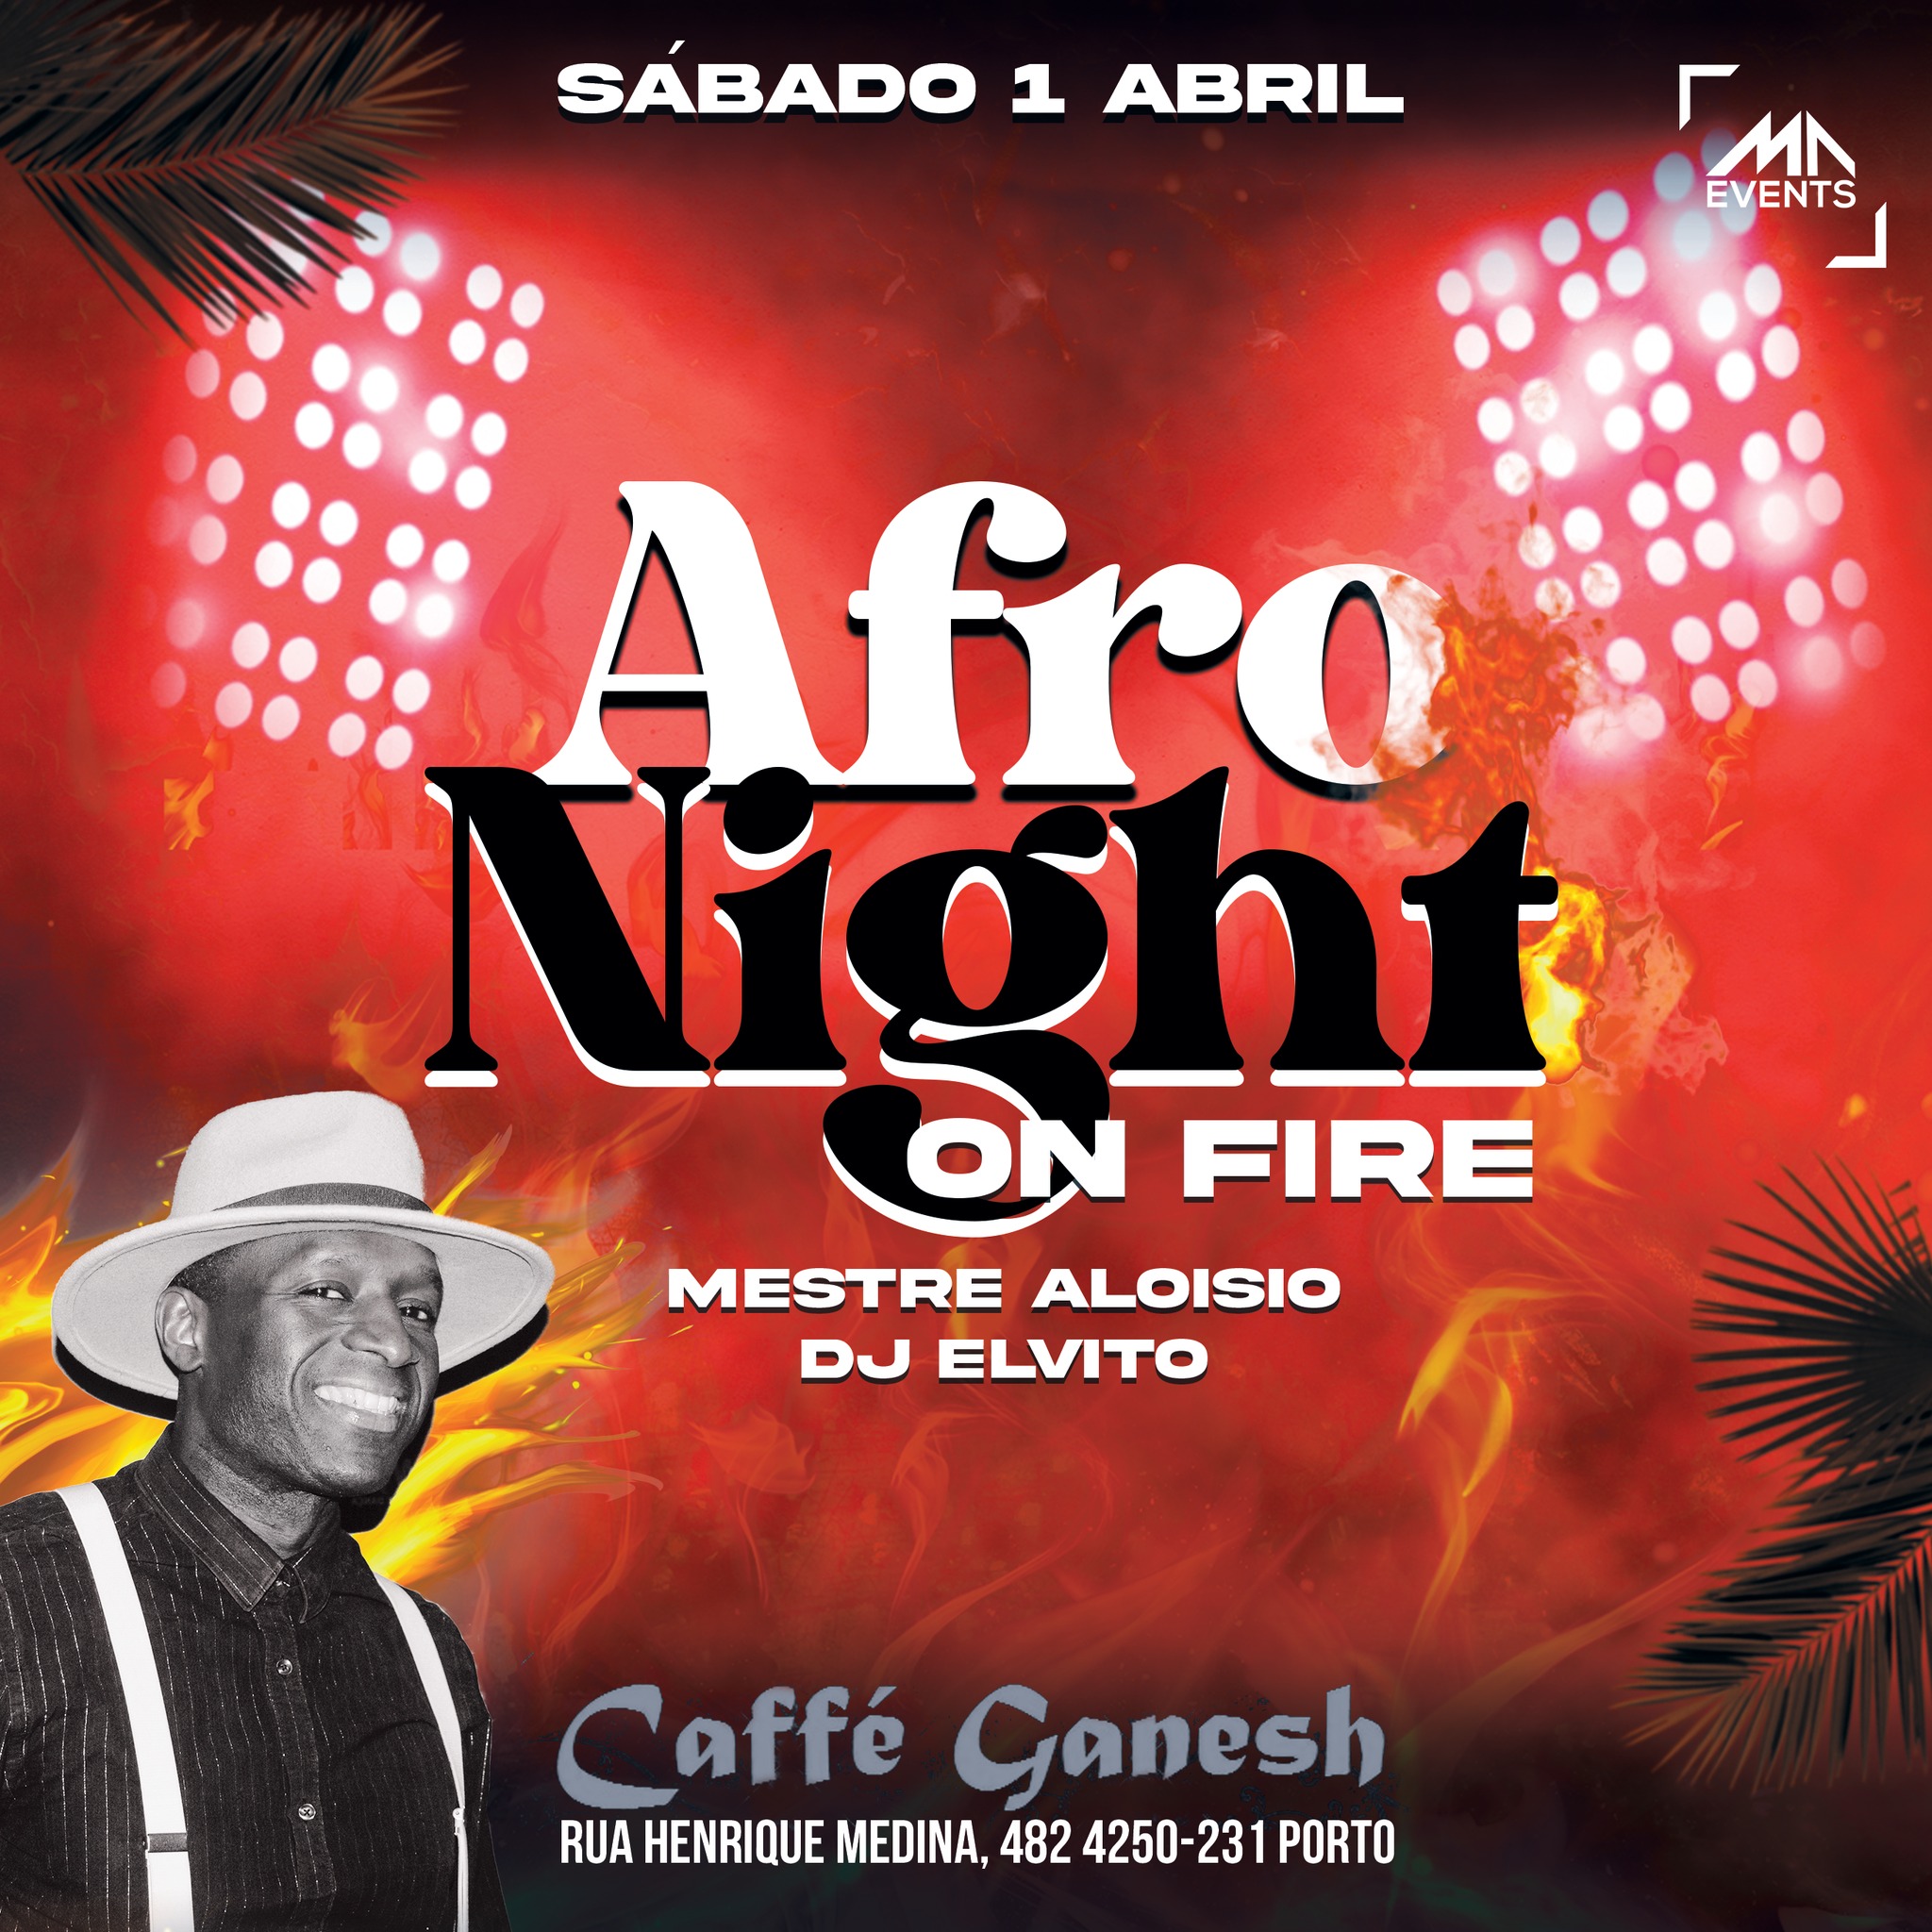 Afro Night ON FIRE c Mestre Aloísio e DJ Elvito